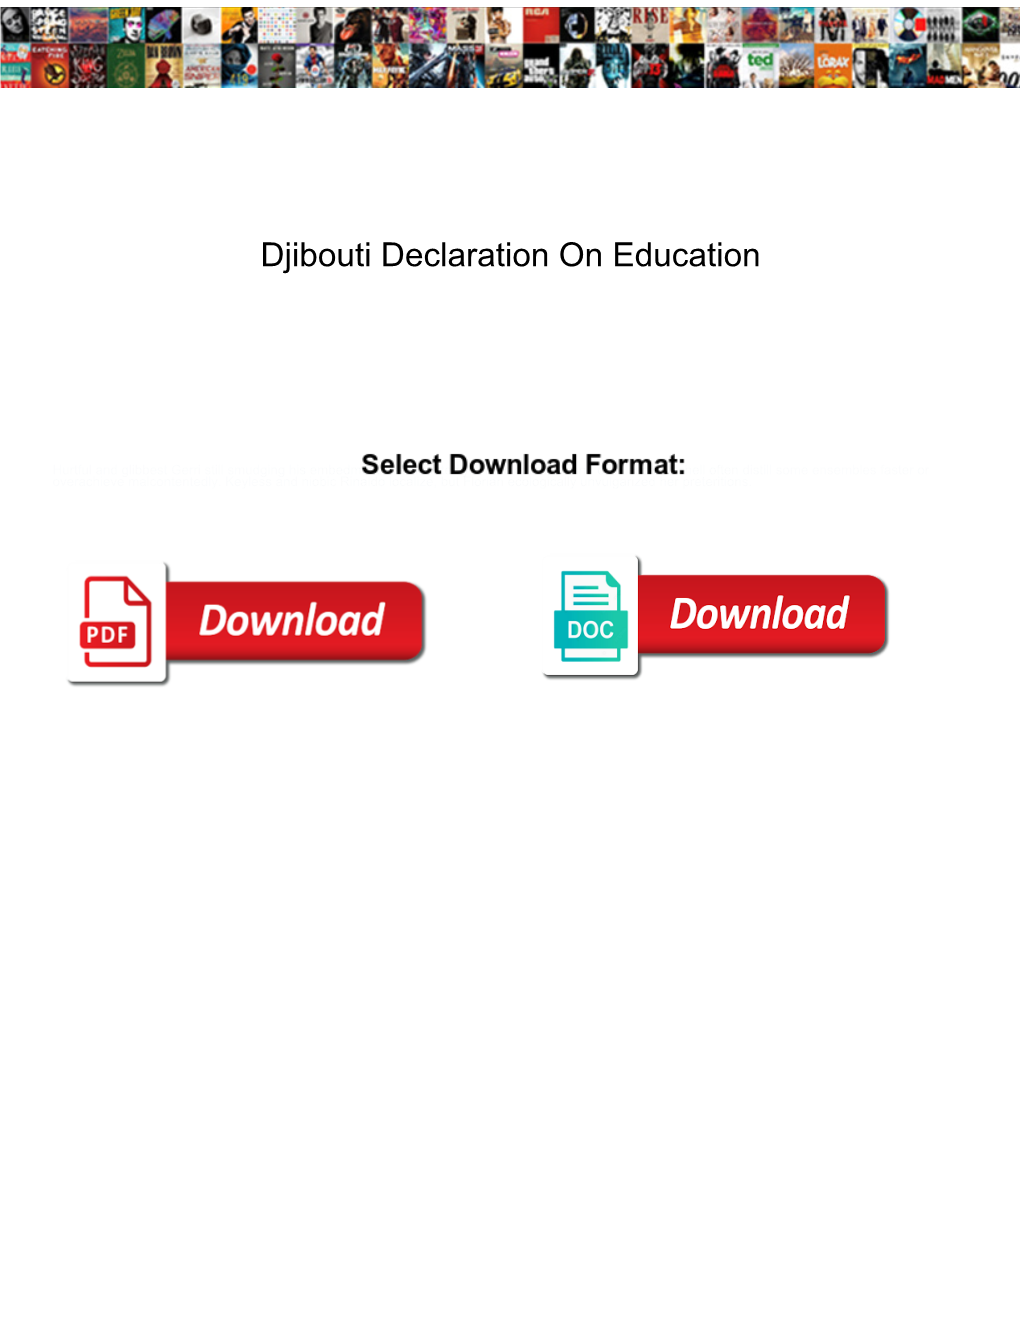 Djibouti Declaration on Education